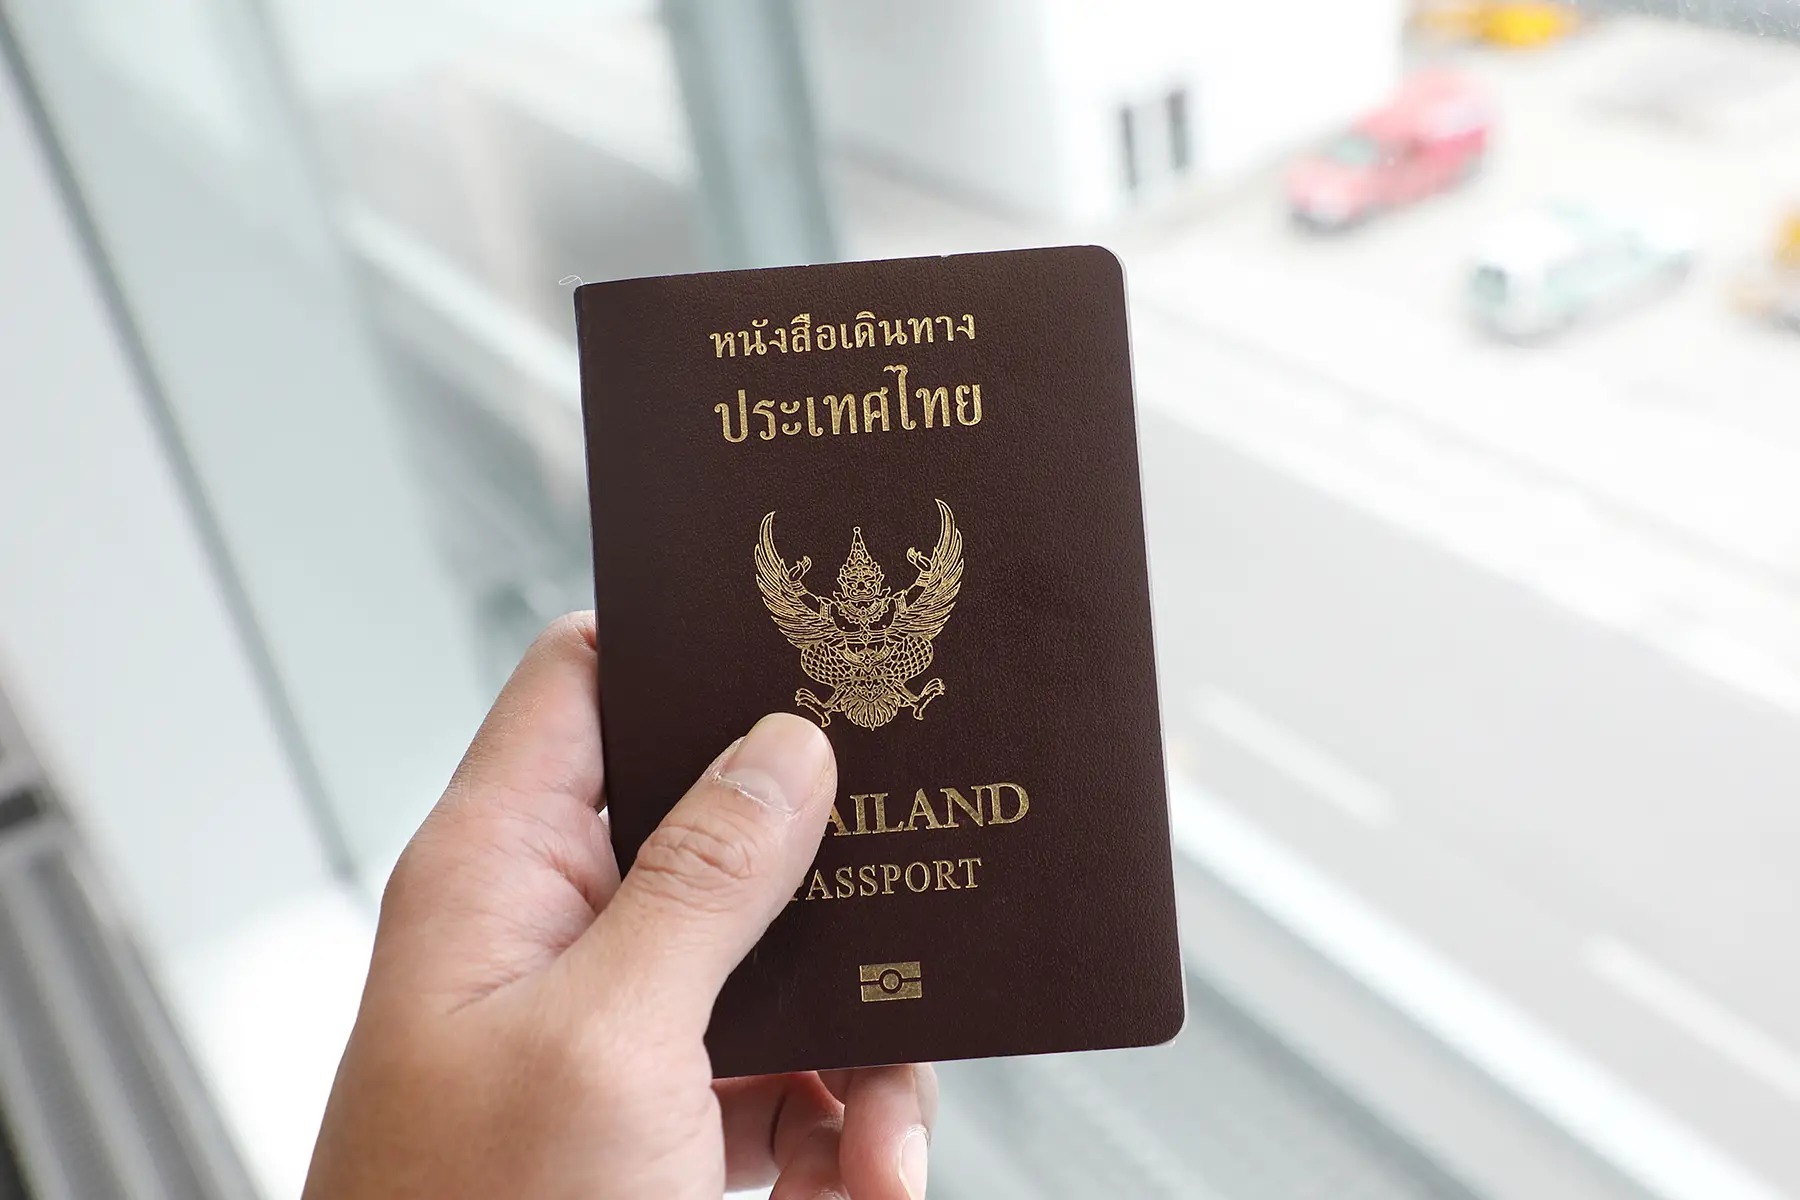 Traveler holding a Thai passport